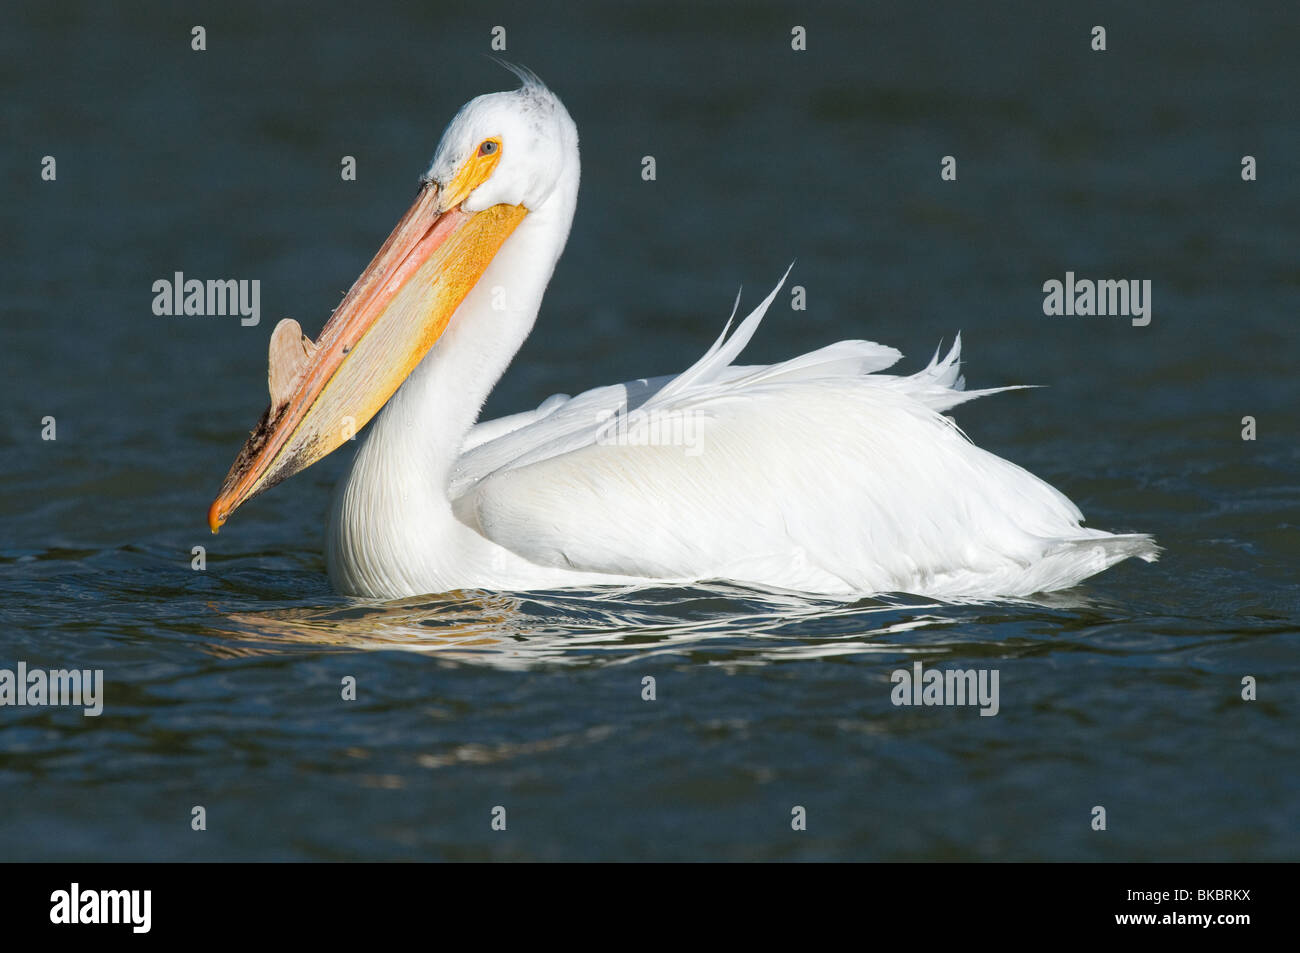 American White Pelican (Pelecanus erythrorhynchos), adult in breeding plumage on water. Stock Photo